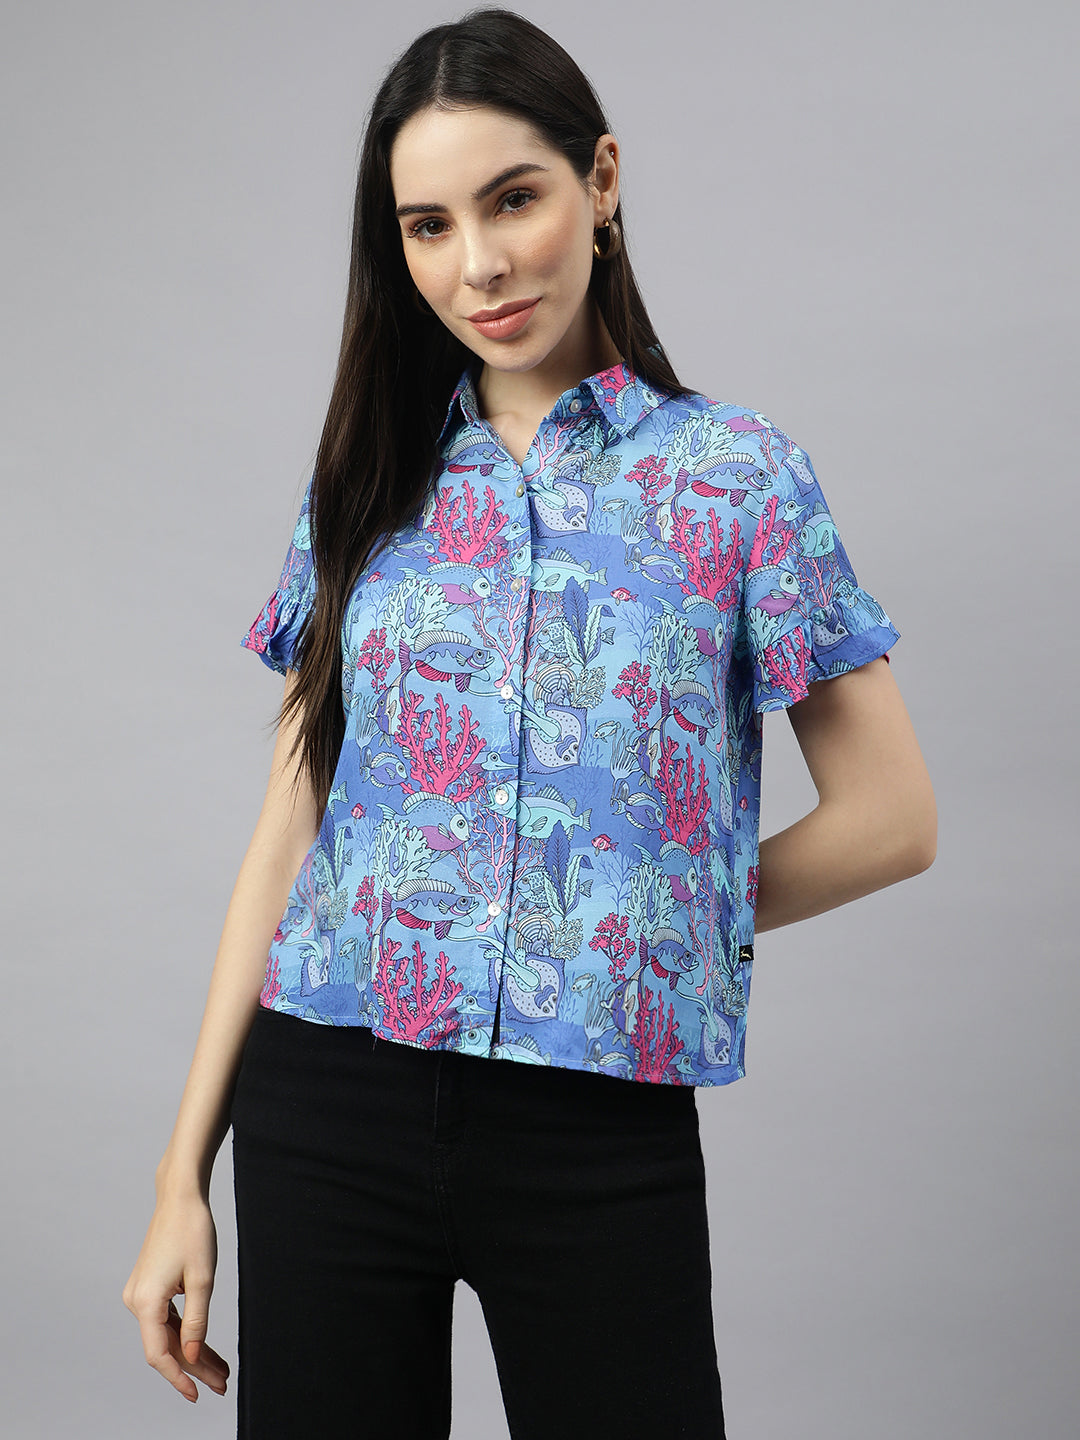 Valbone Women’s Blue Modal Silk Printed Shirt Success